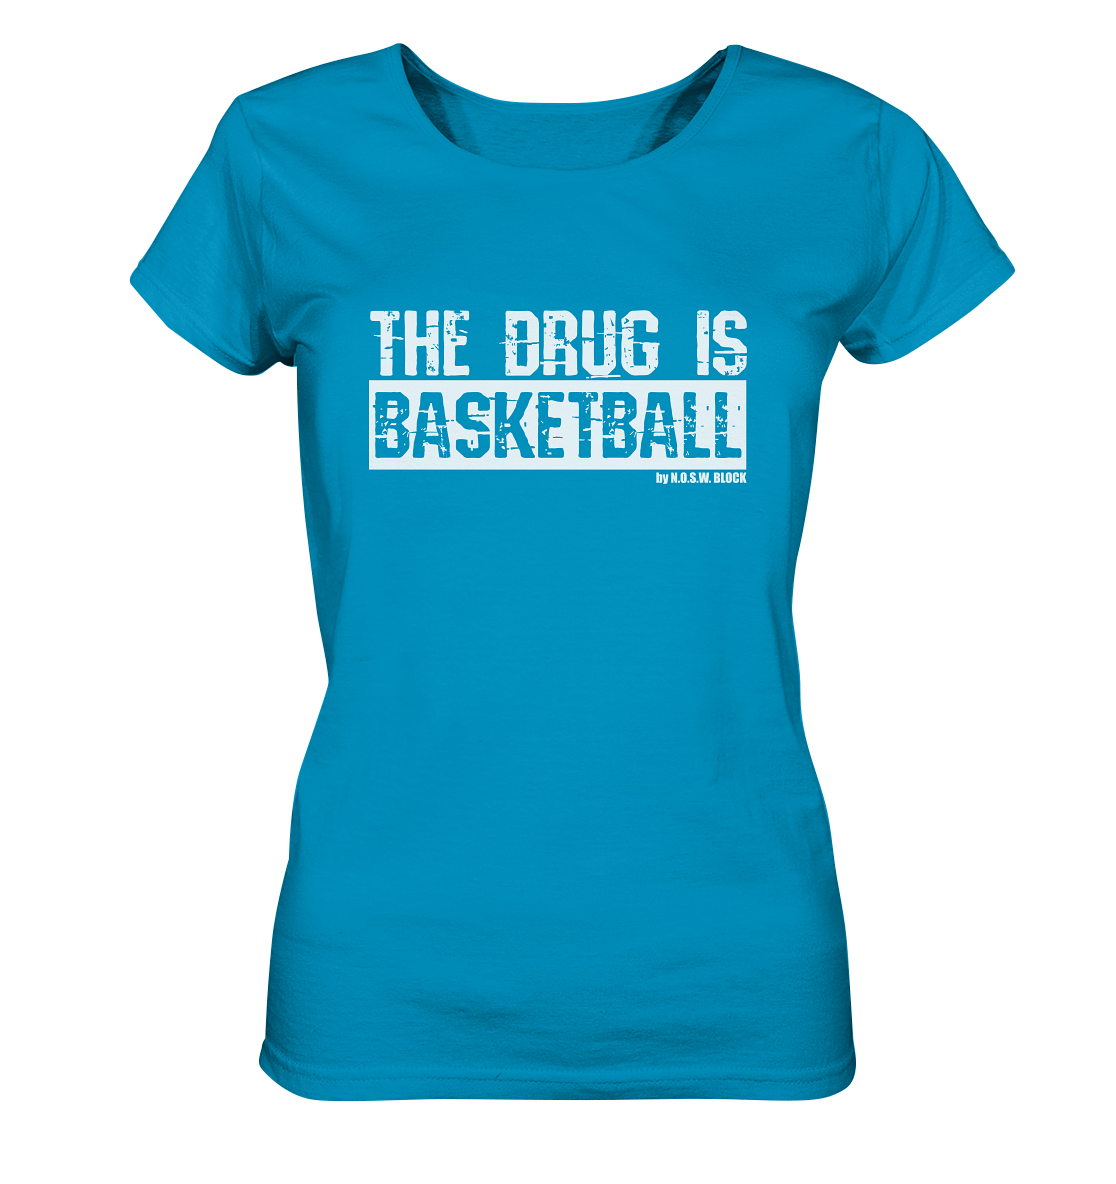 N.O.S.W. BLOCK Fanblock Shirt "THE DRUG IS BASKETBALL" Girls Organic T-Shirt azur